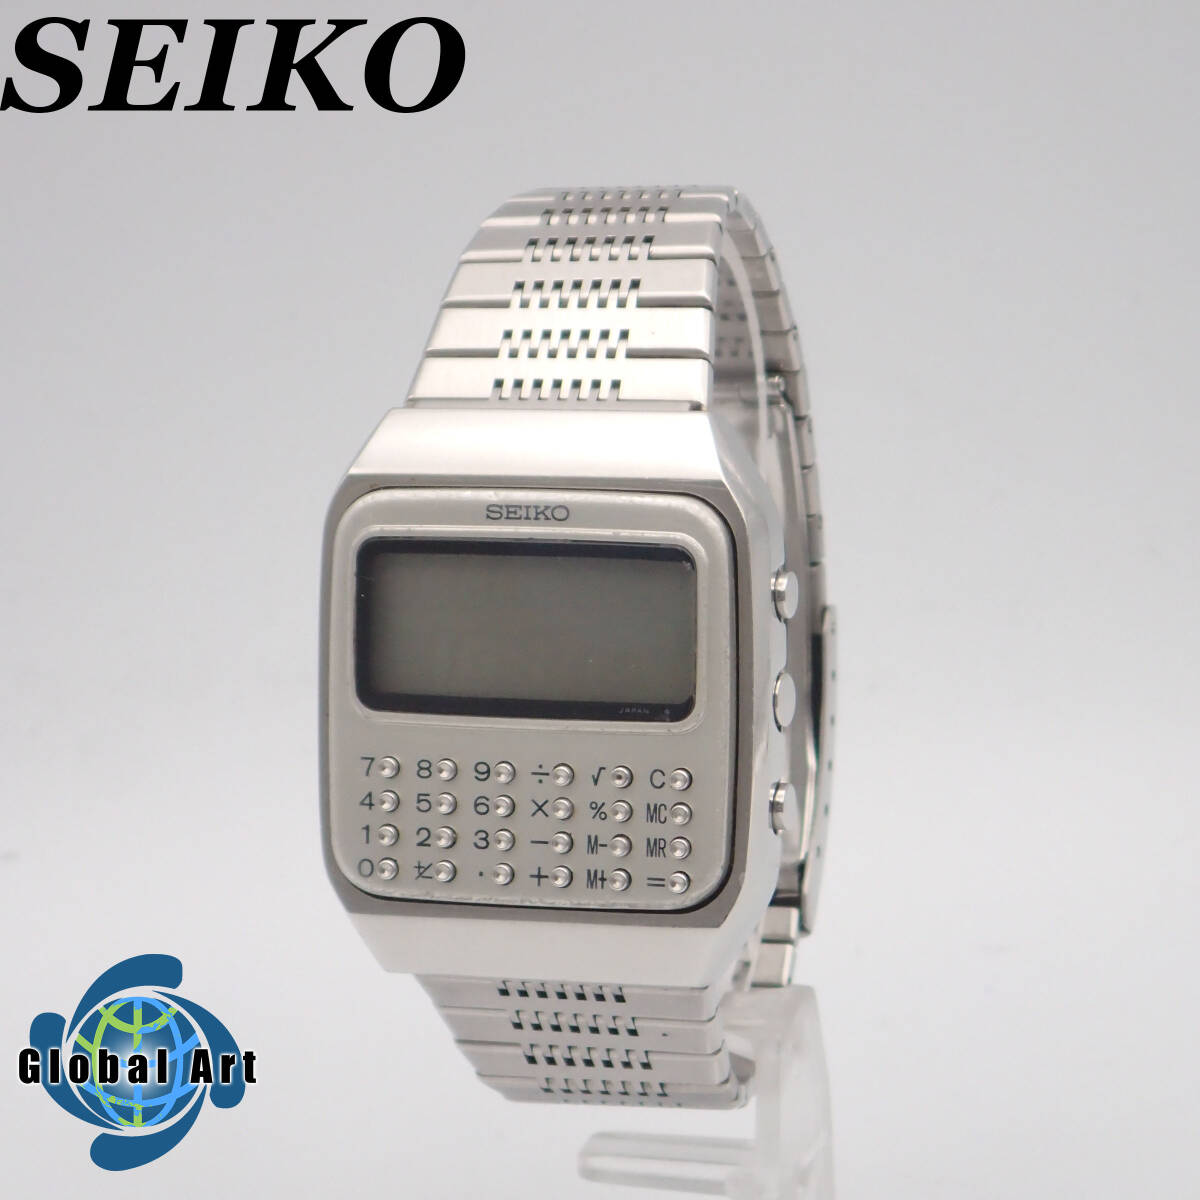 Yahoo!オークション -「SEIKO デジタル腕時計」の落札相場・落札価格